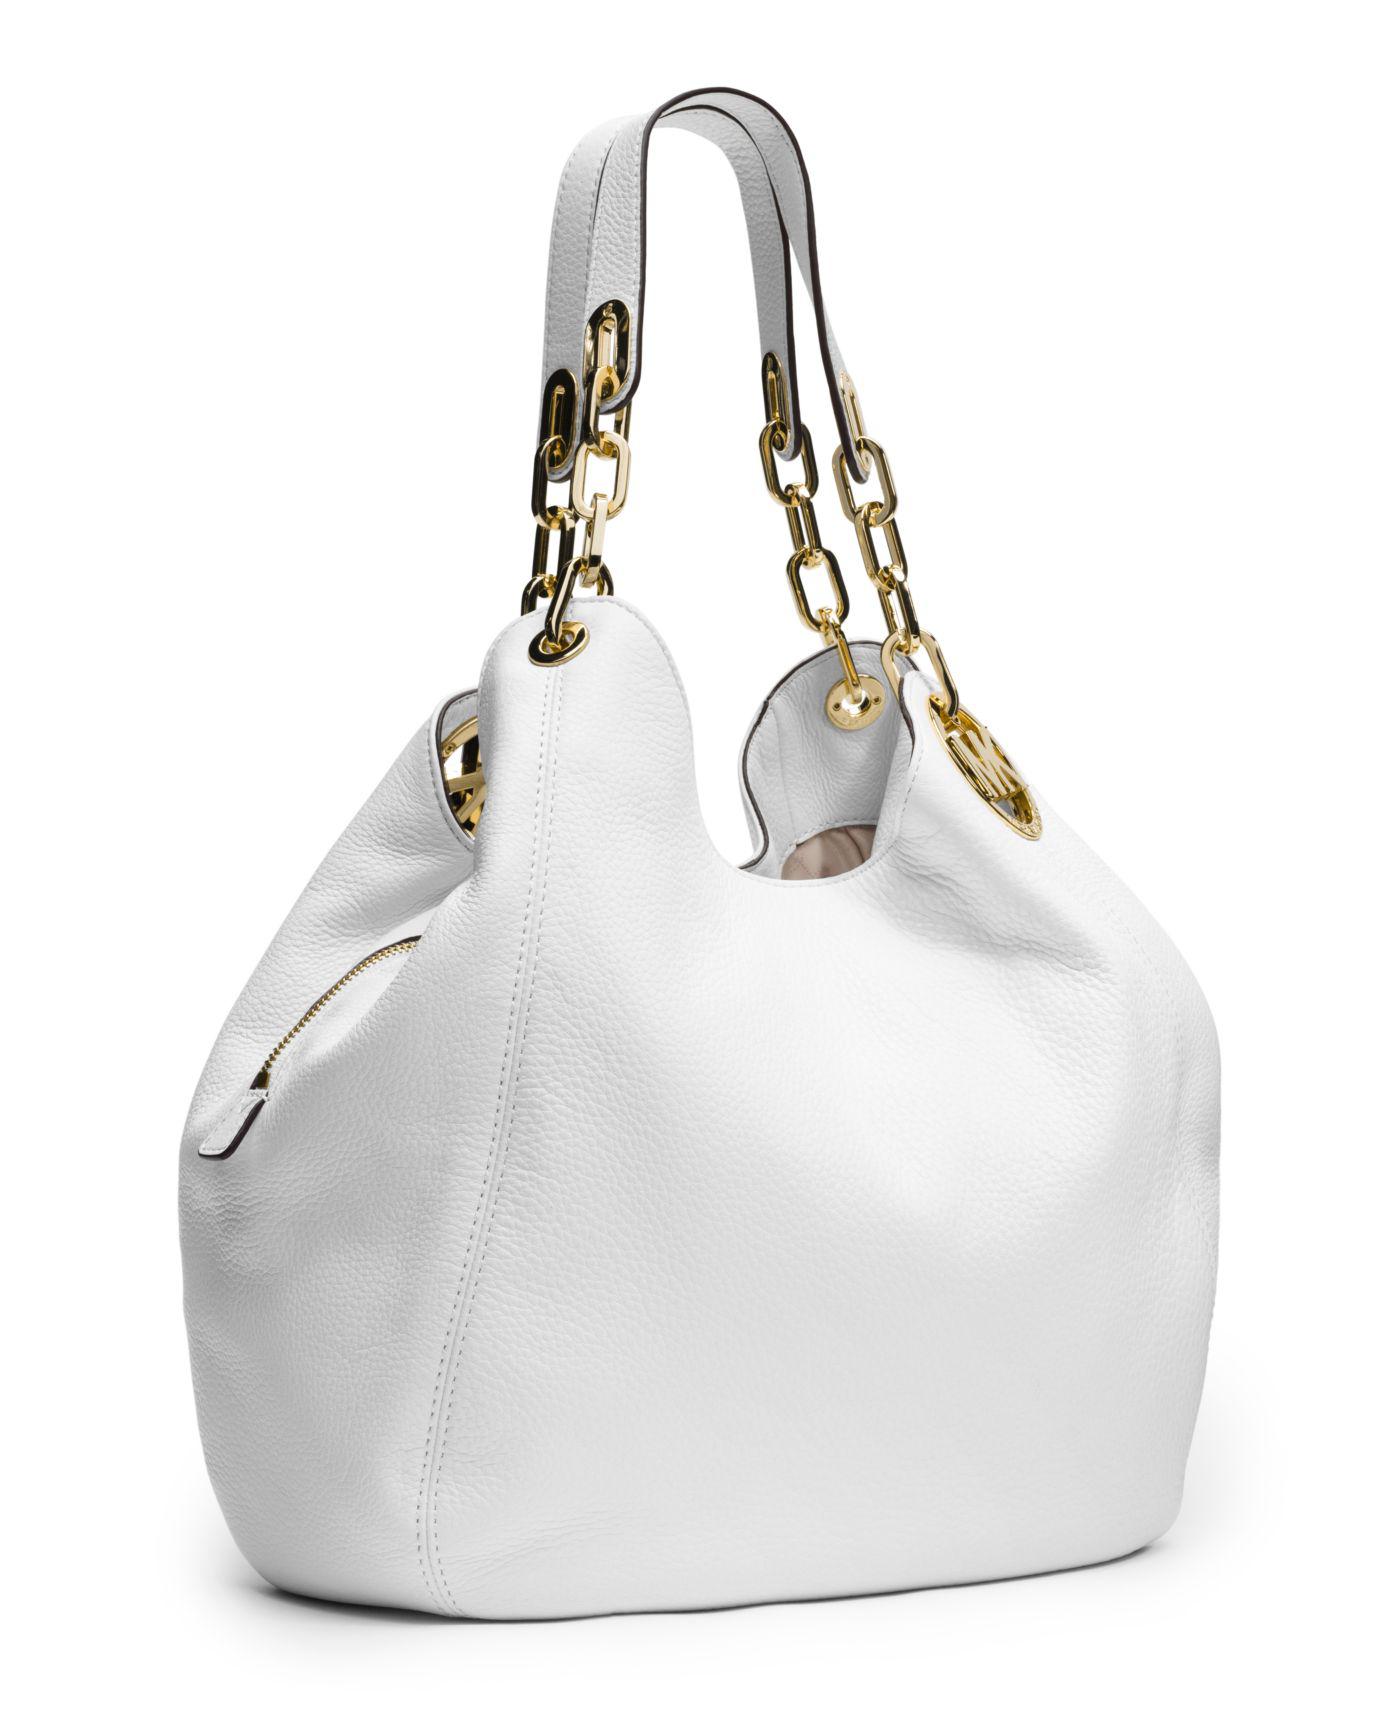 Michael Kors Fulton Large Leather Shoulder Bag in White | Lyst